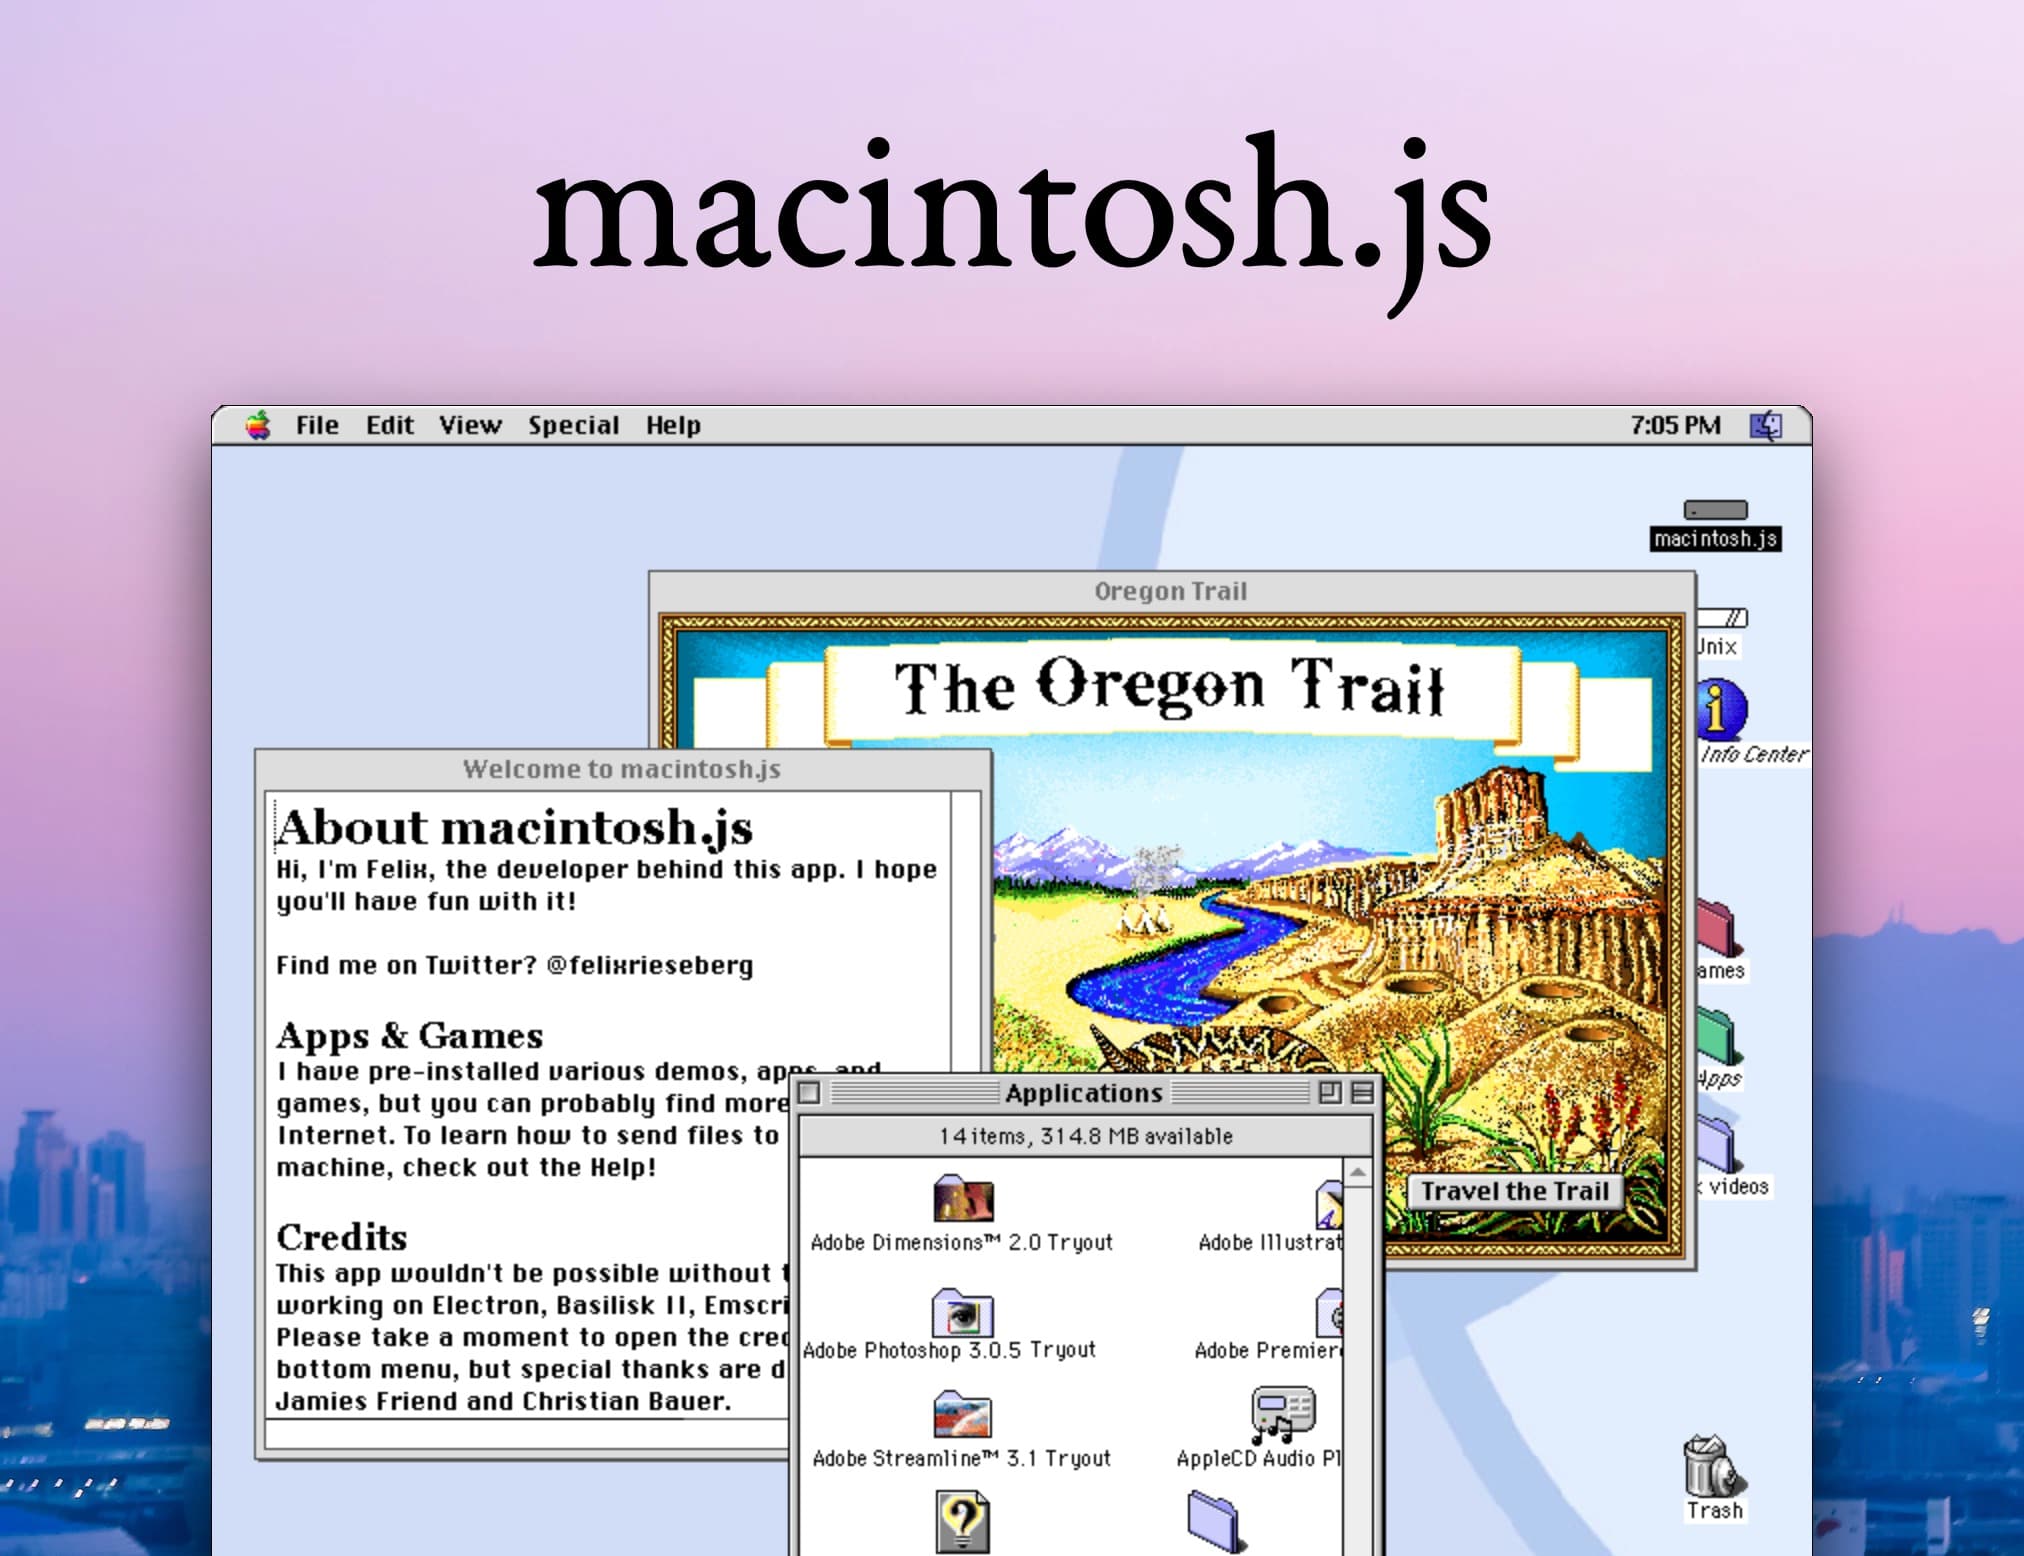 Macintosh.js